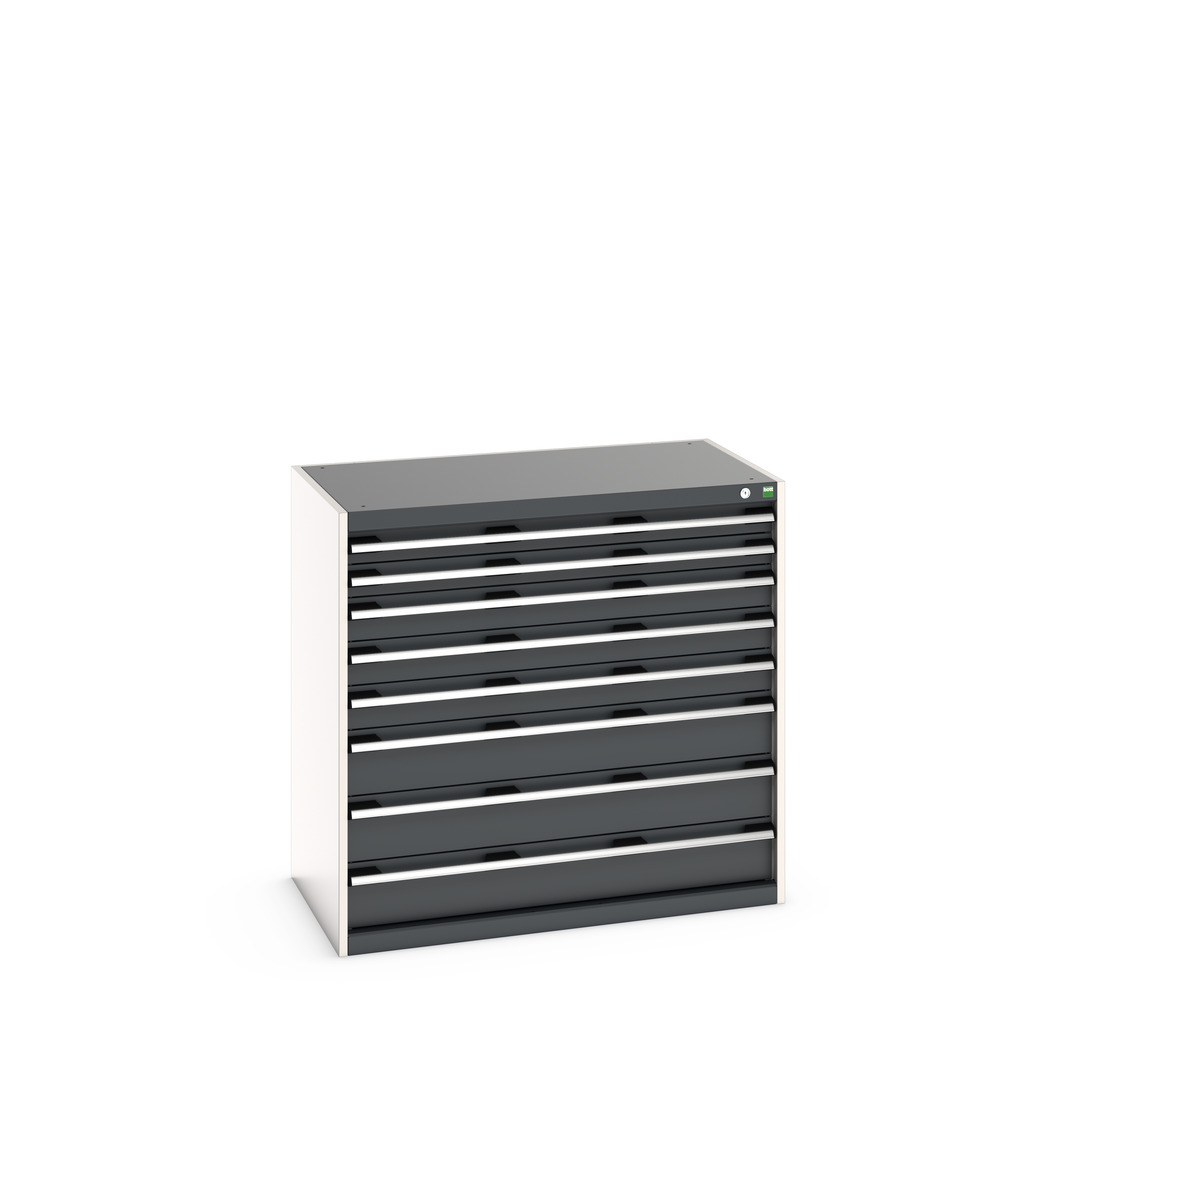 40021034. - cubio drawer cabinet